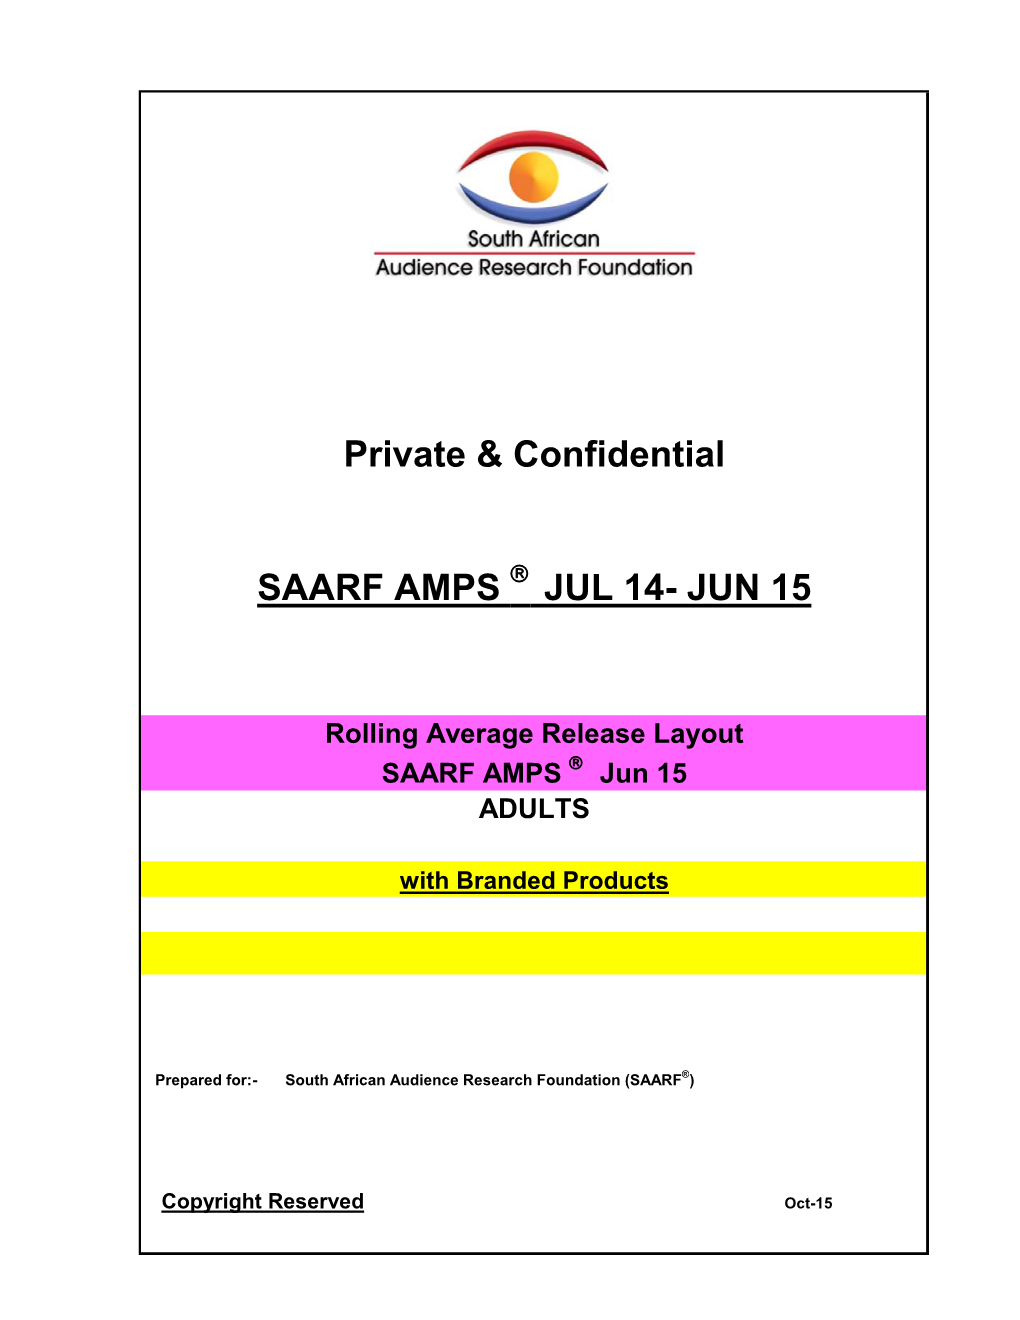 Private & Confidential SAARF AMPS JUL 14- JUN 15